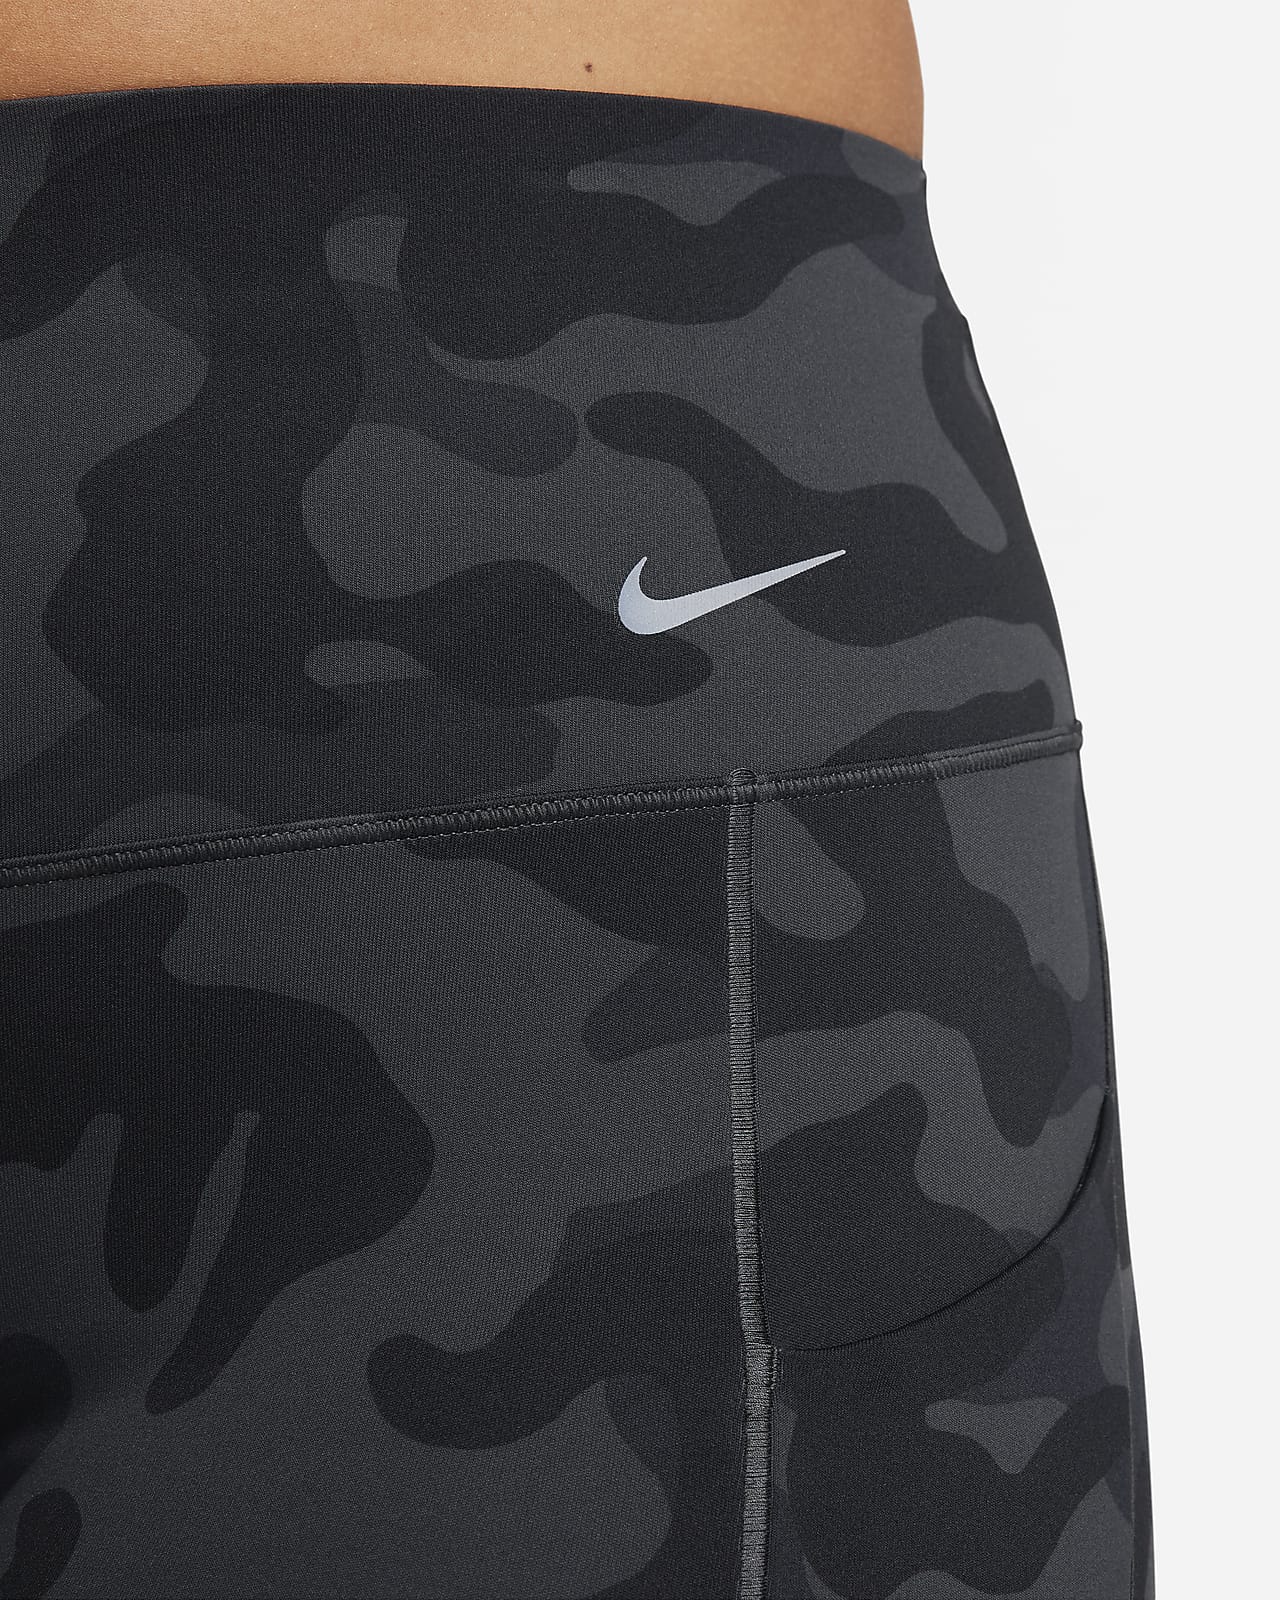 Nike dri fit camo leggings NWT size small